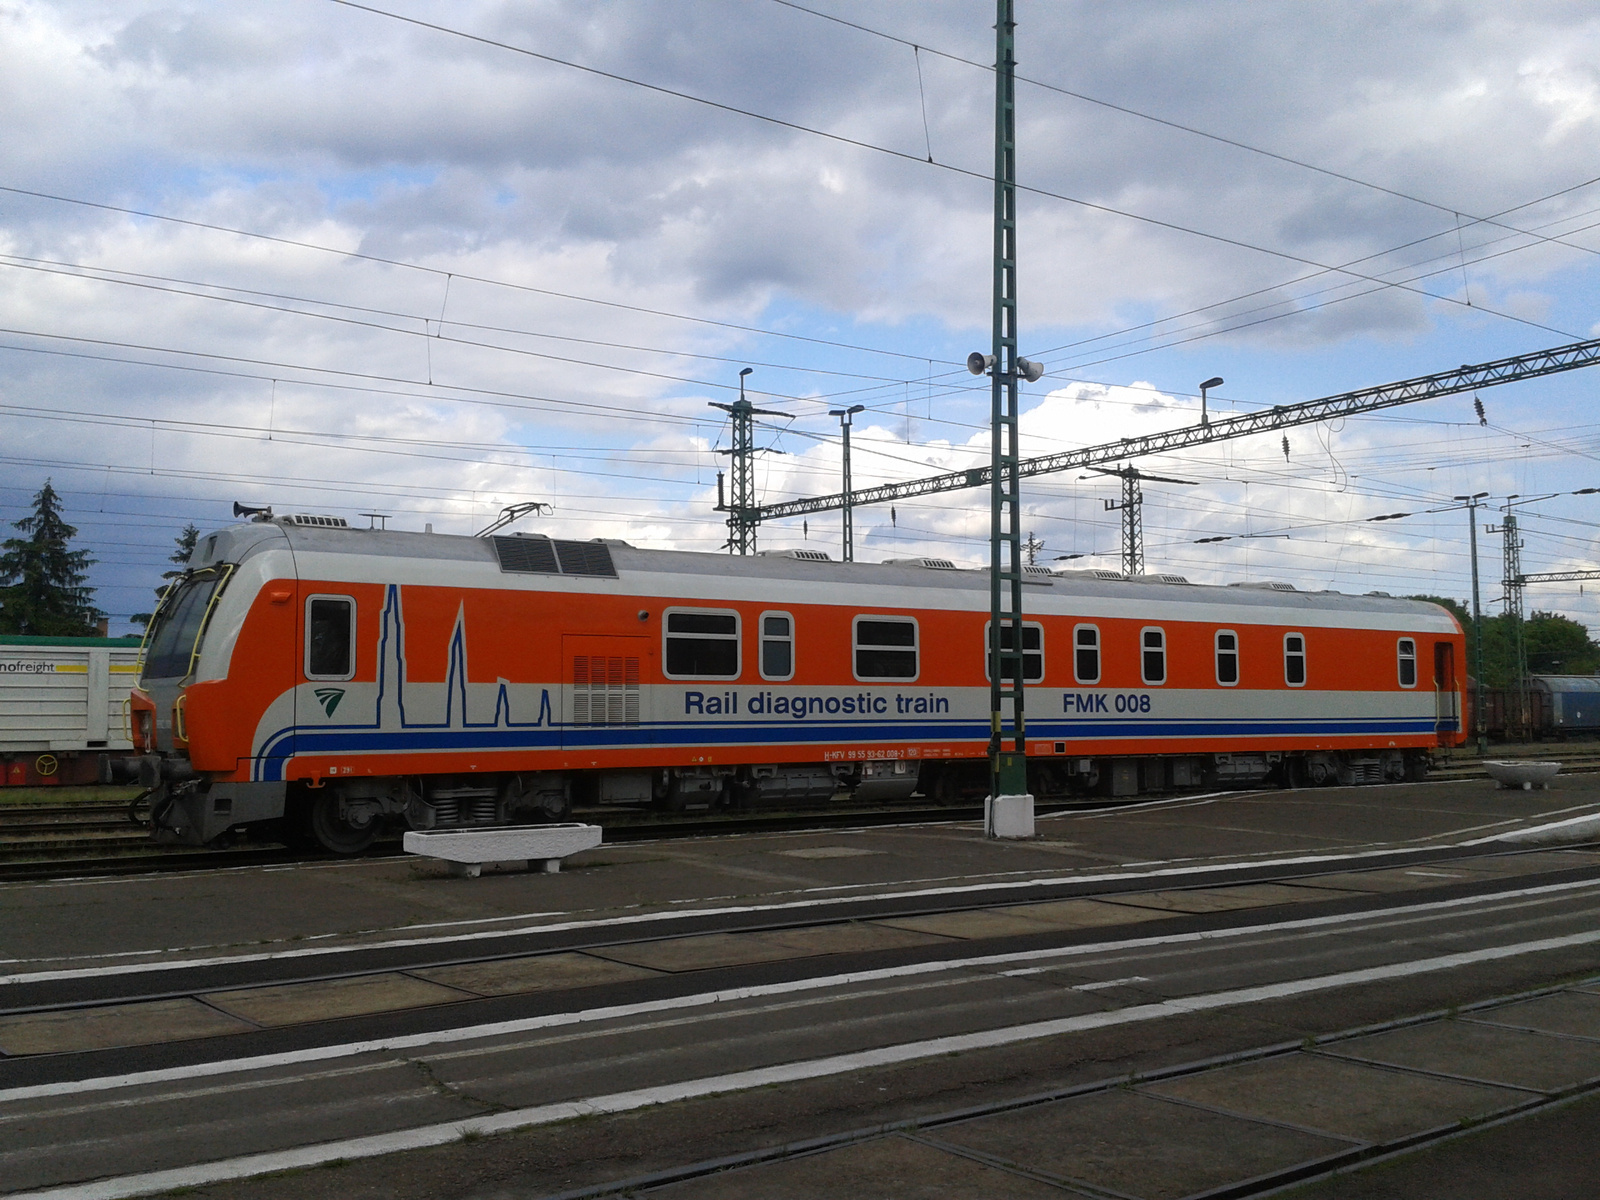 9362 008 Rail diagnostic train FMK 008